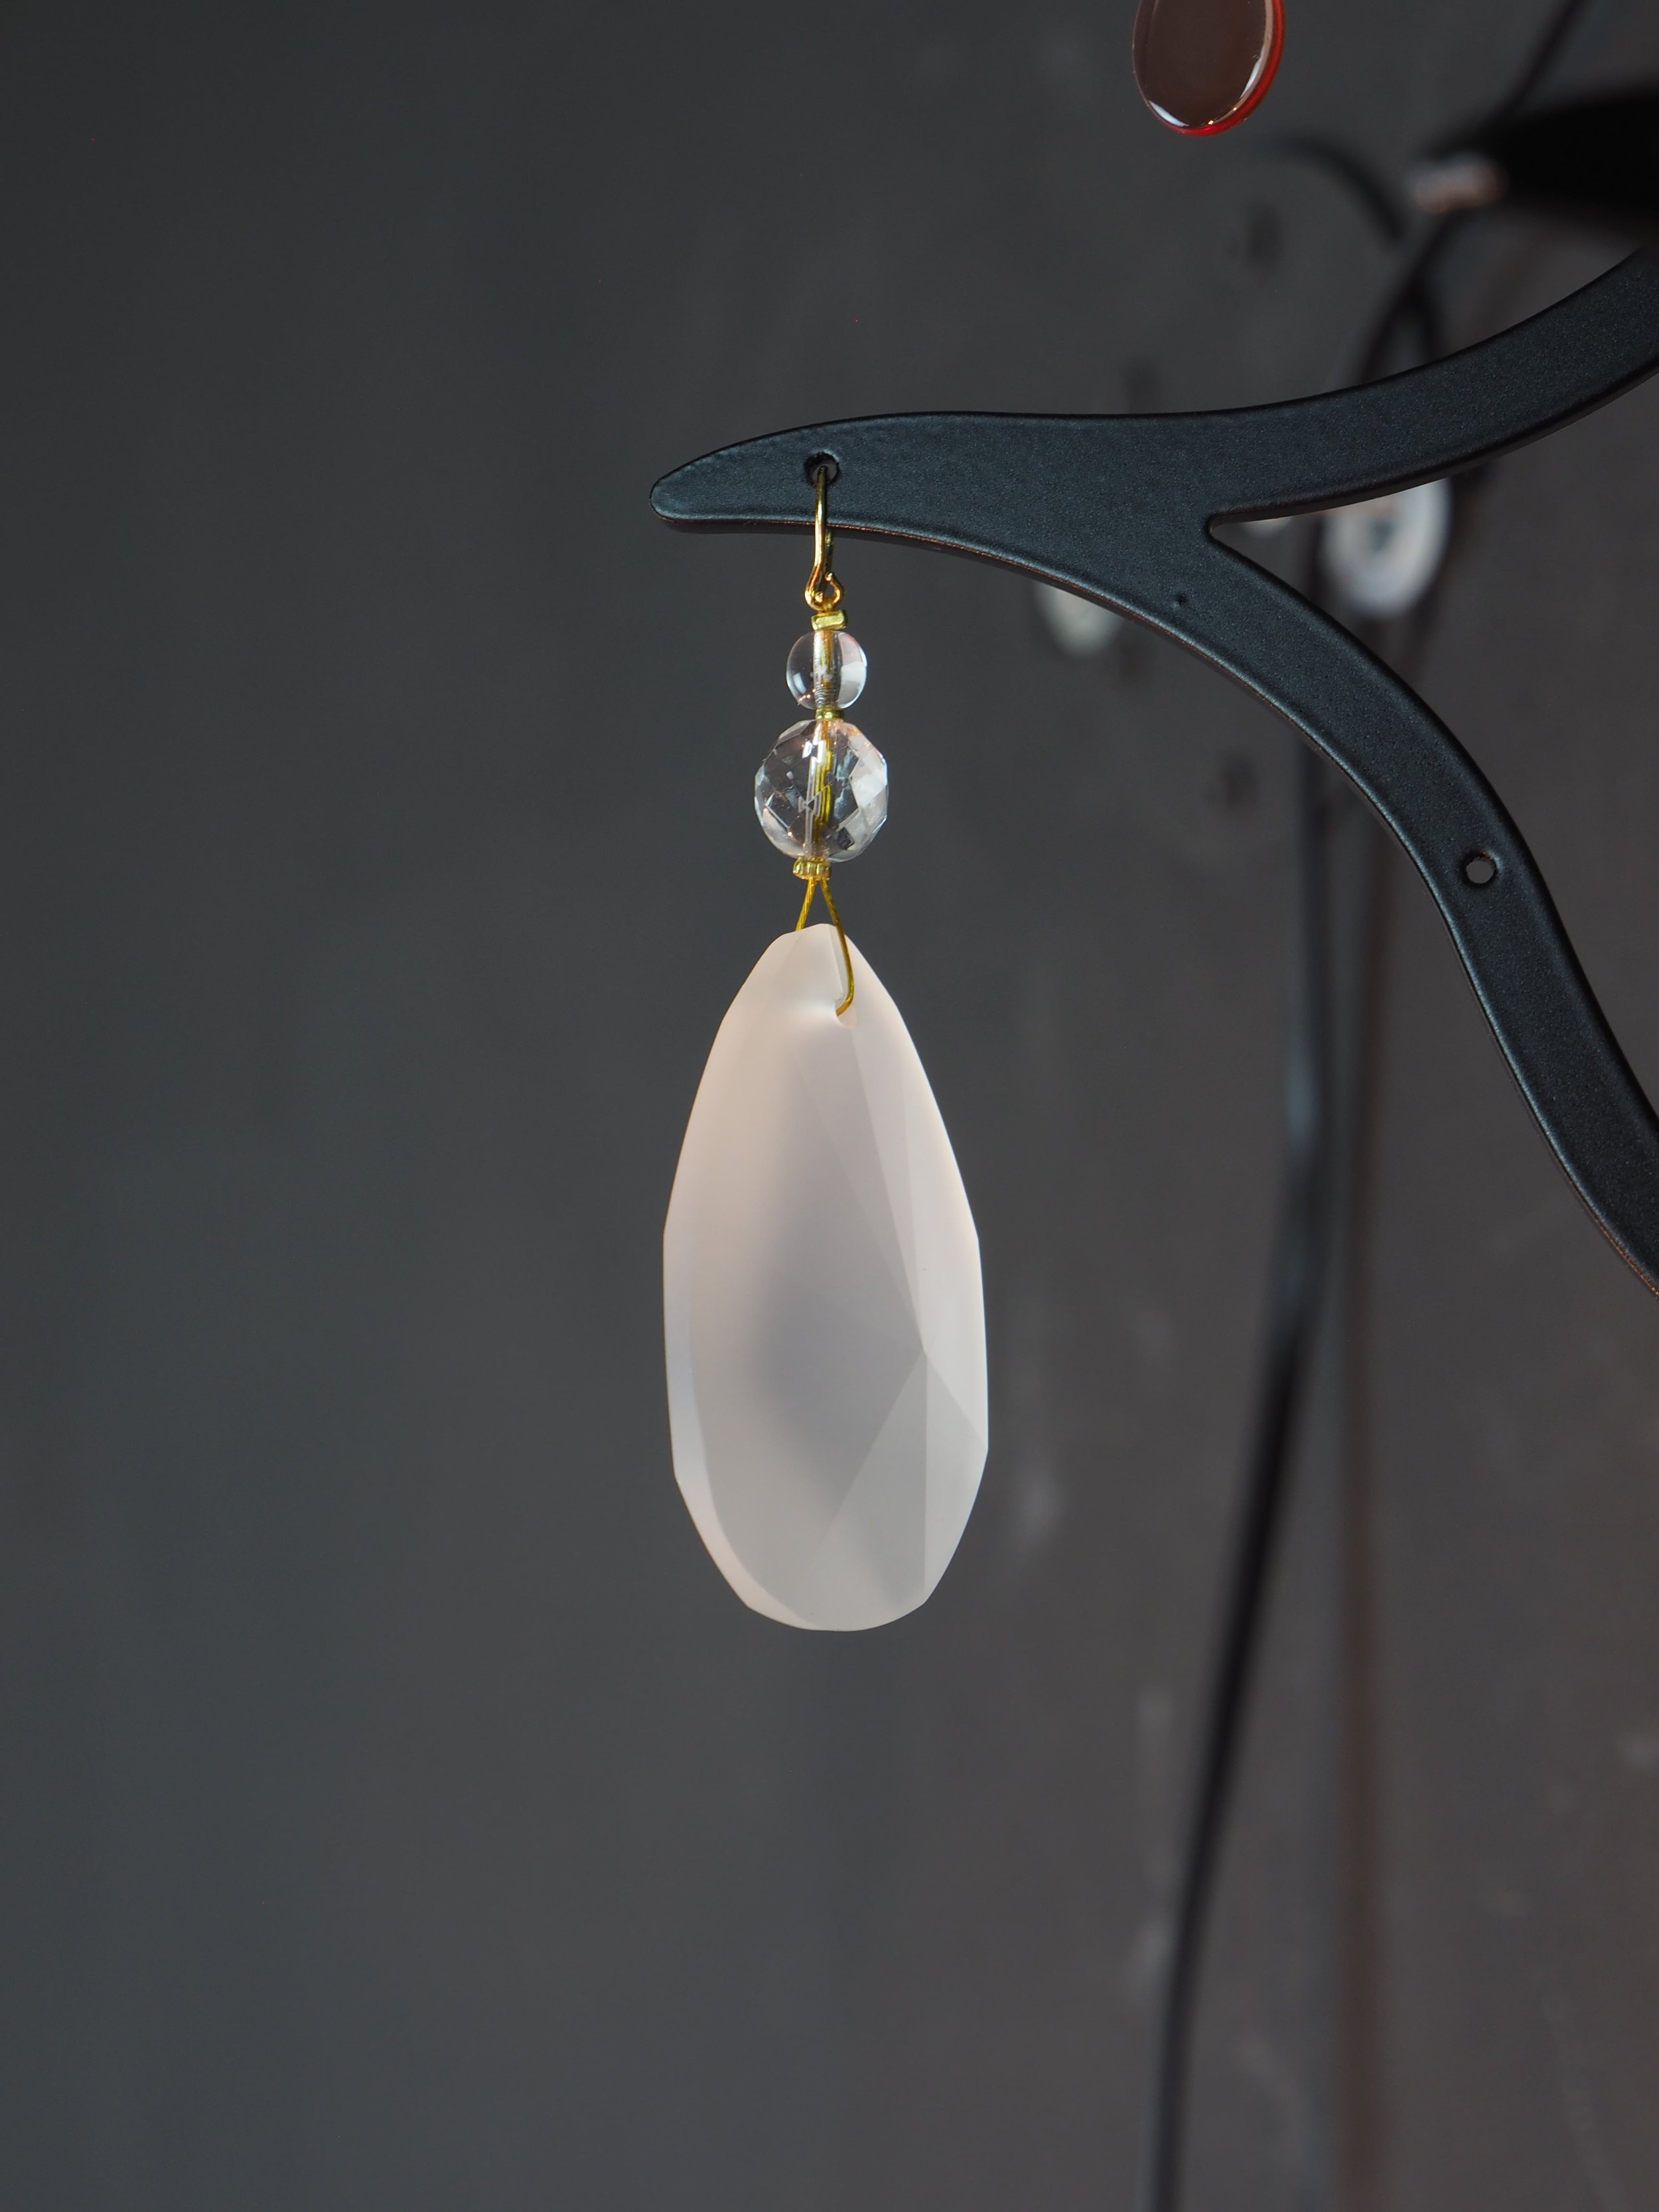 chanel-chandelier-details-6.JPG